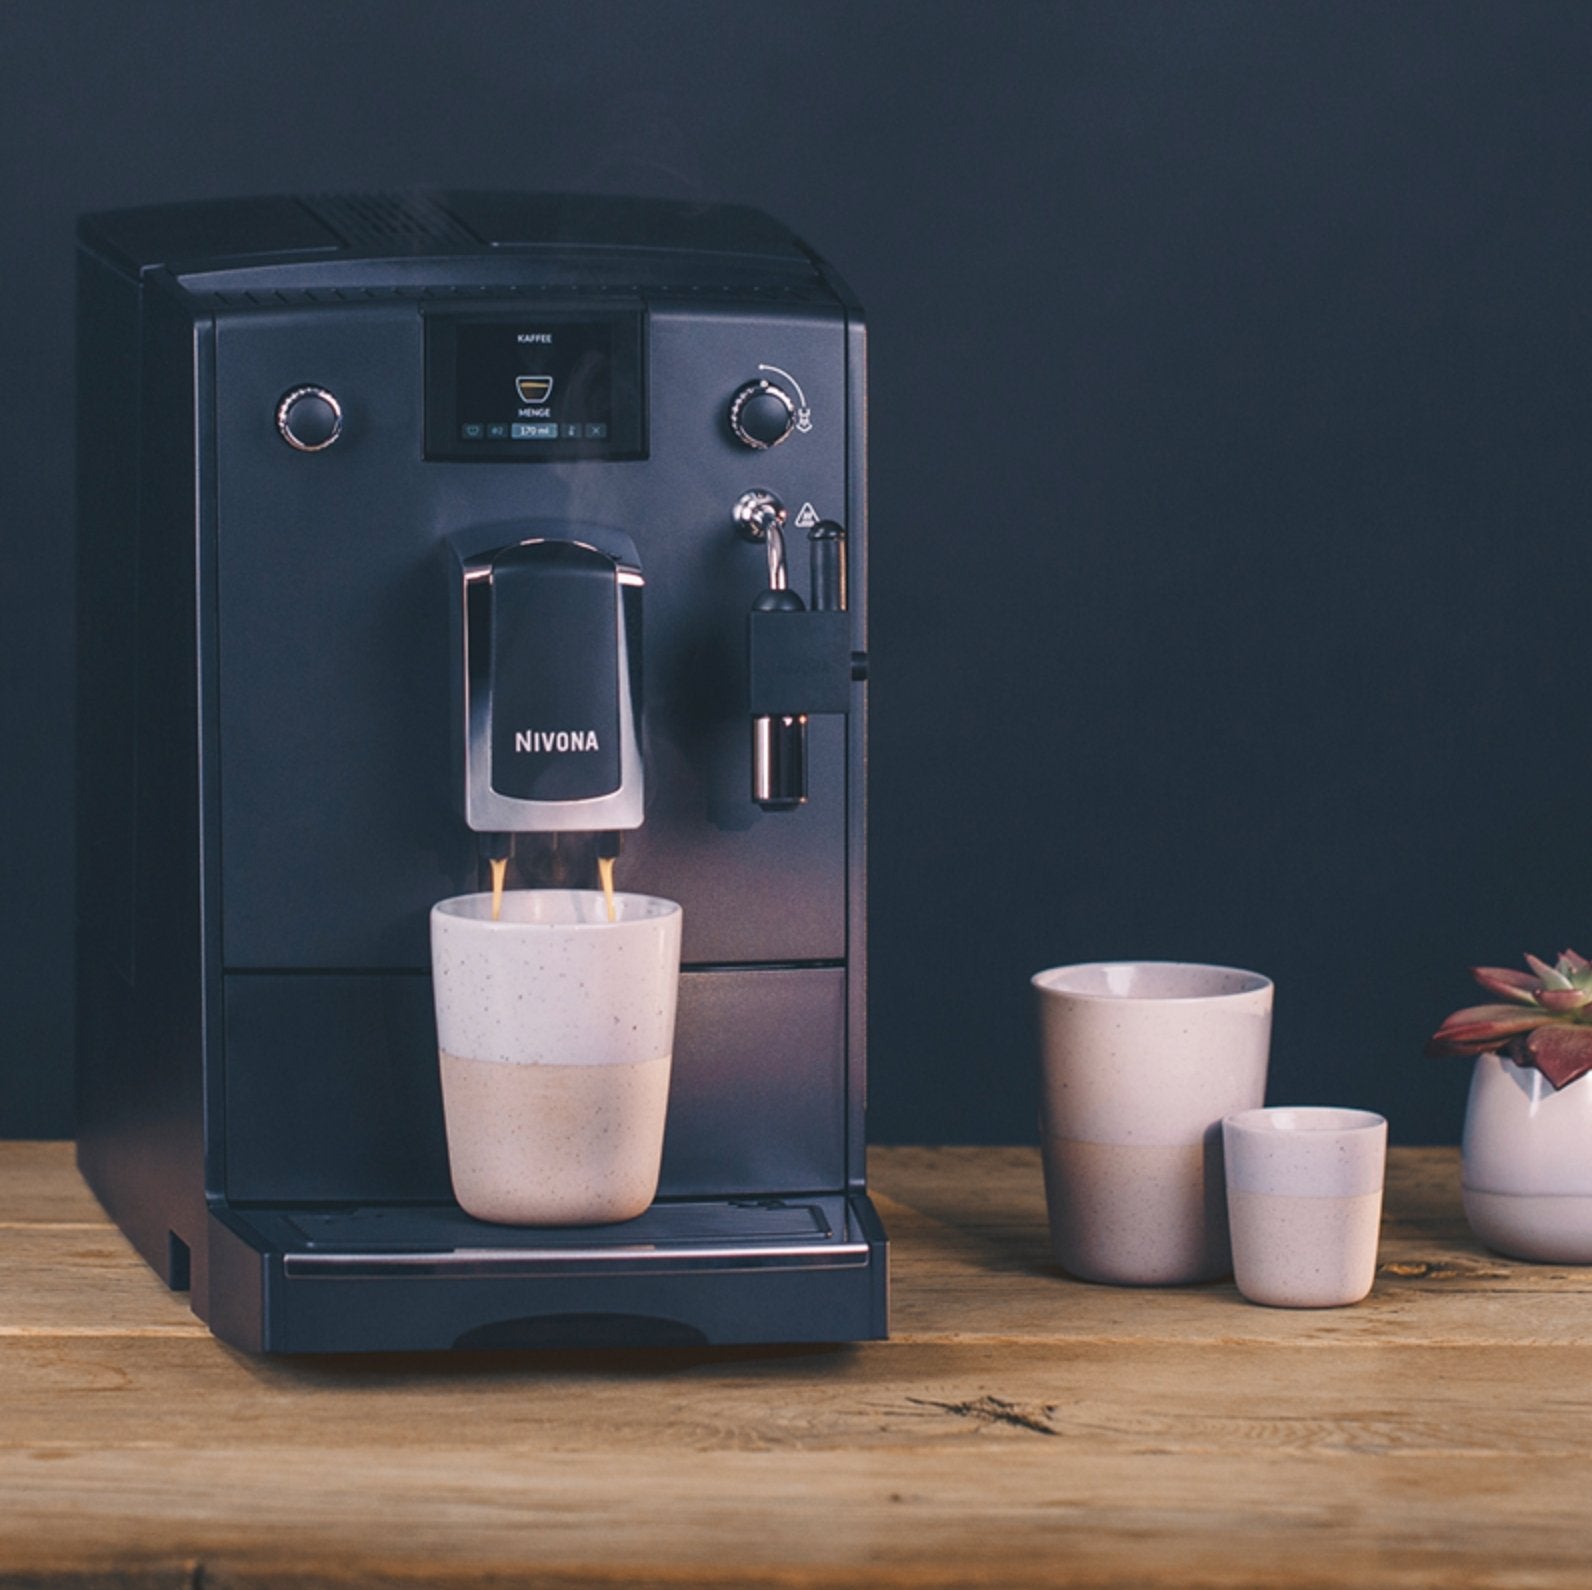 Buy Nivona automatic coffee machines